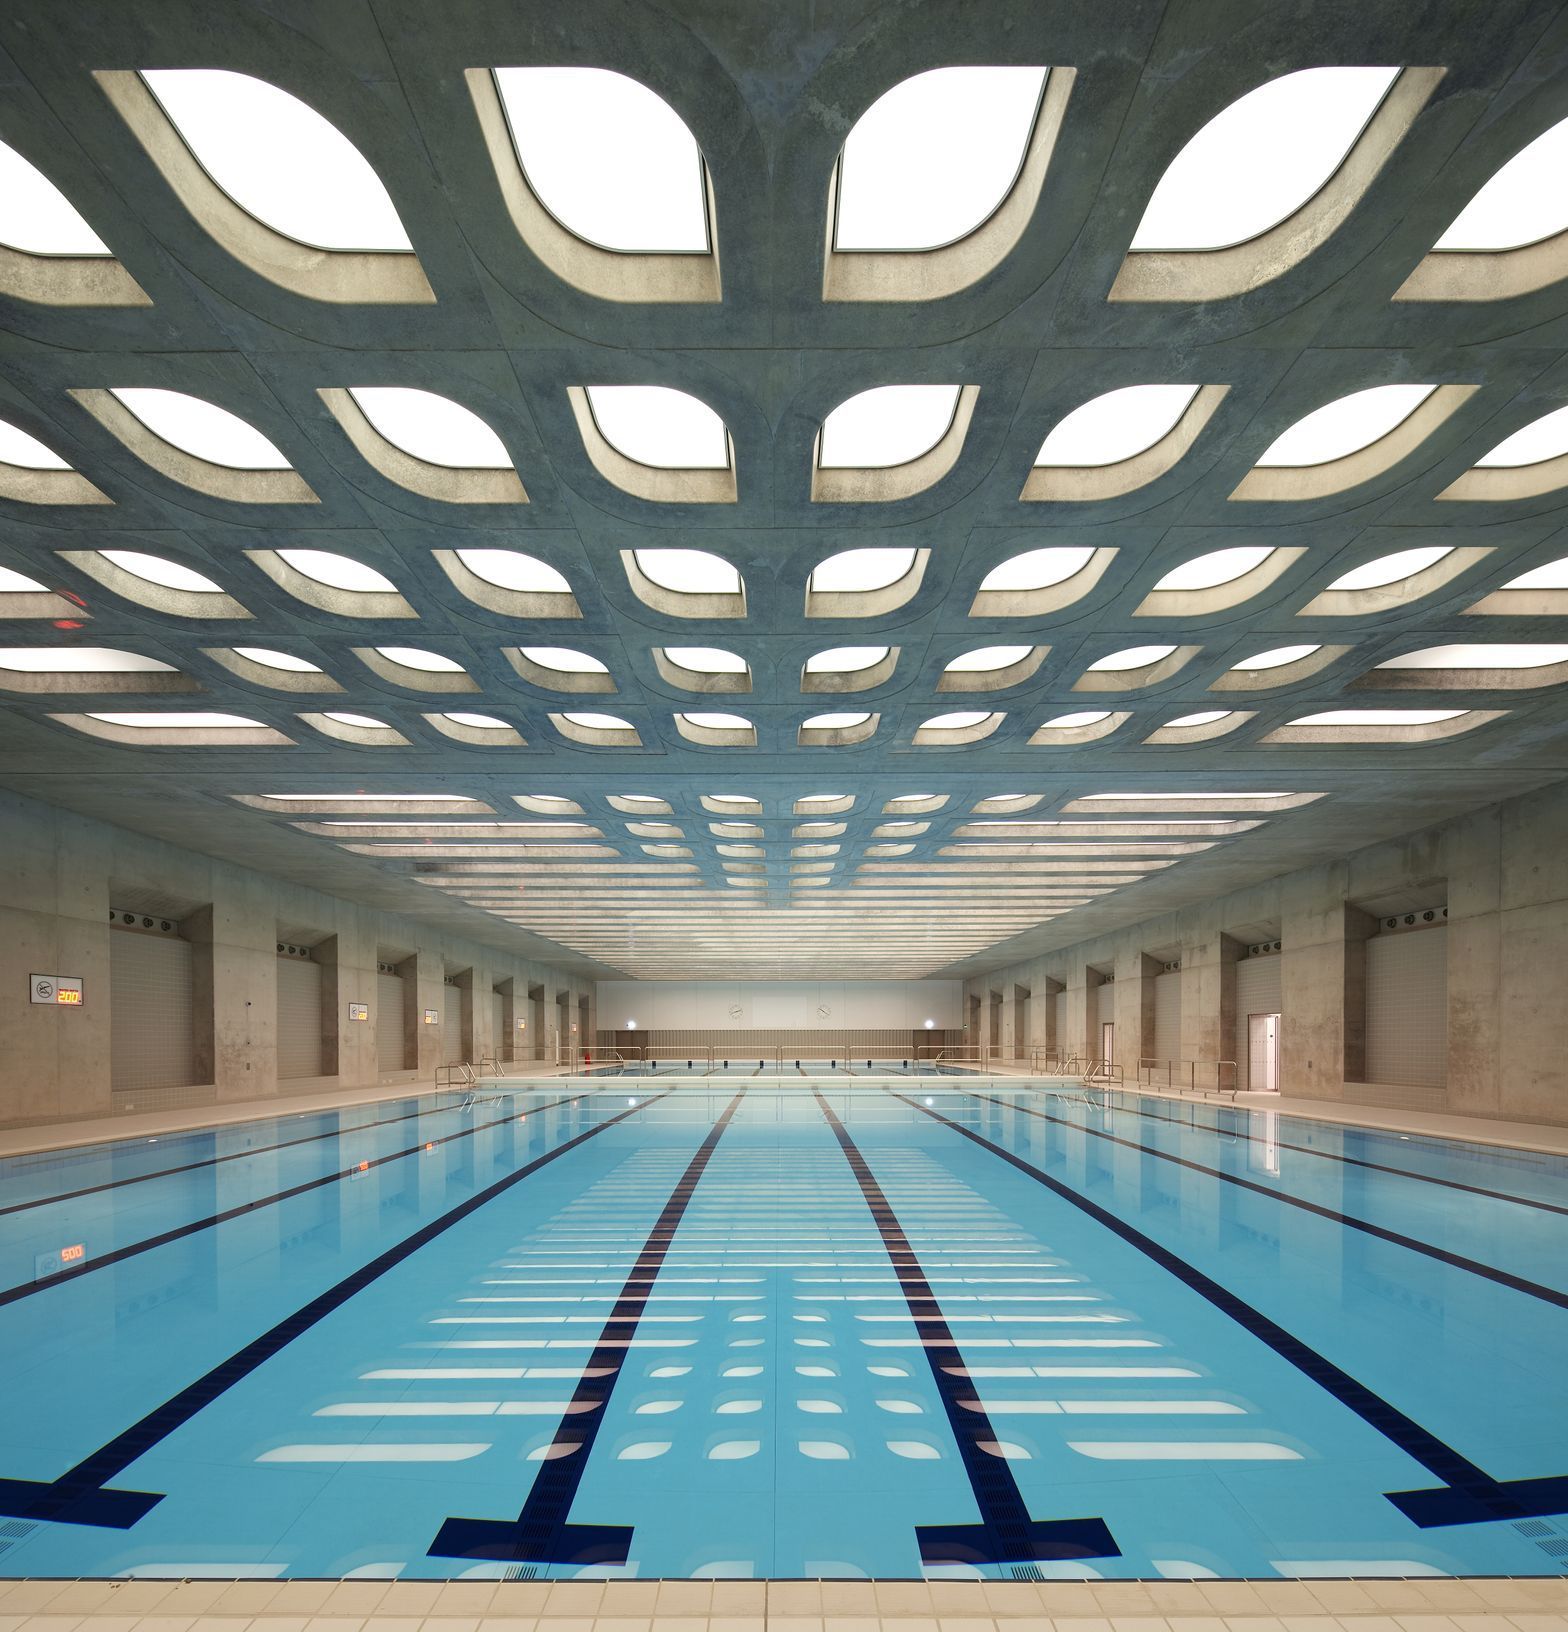 Zaha Hadid London Aquatic Centre